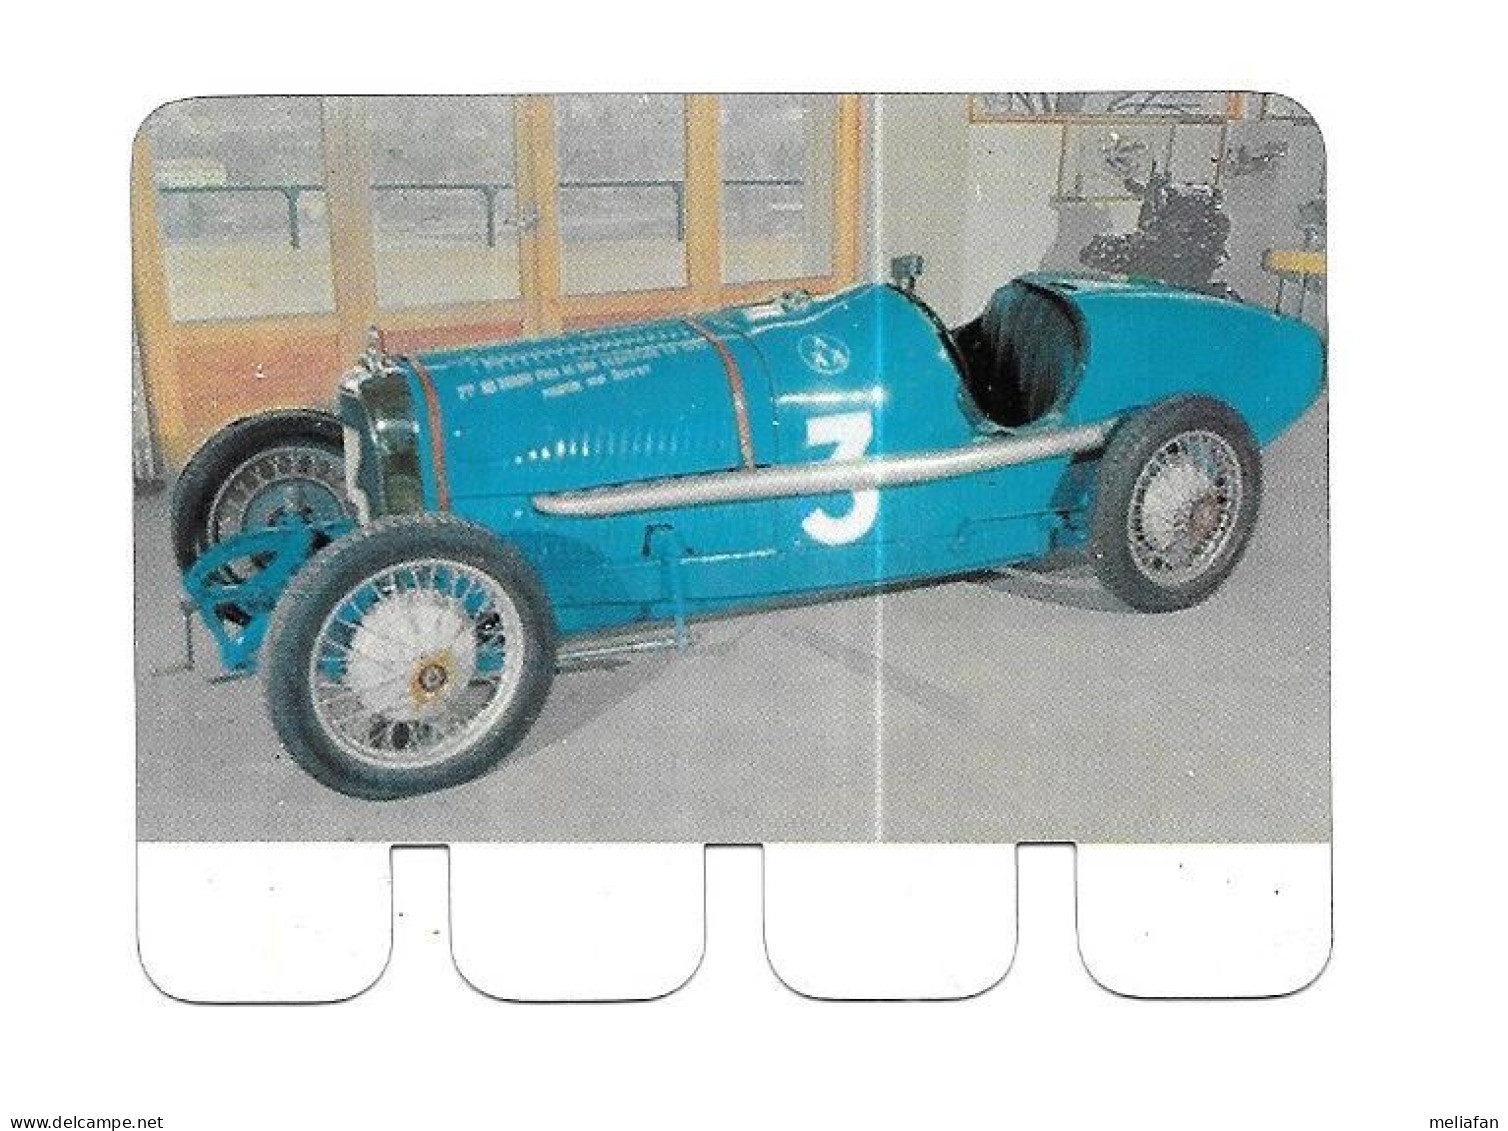 BL94 - IMAGE METALLIQUE COOP - ROLLAND PILAIN 1923 - Car Racing - F1